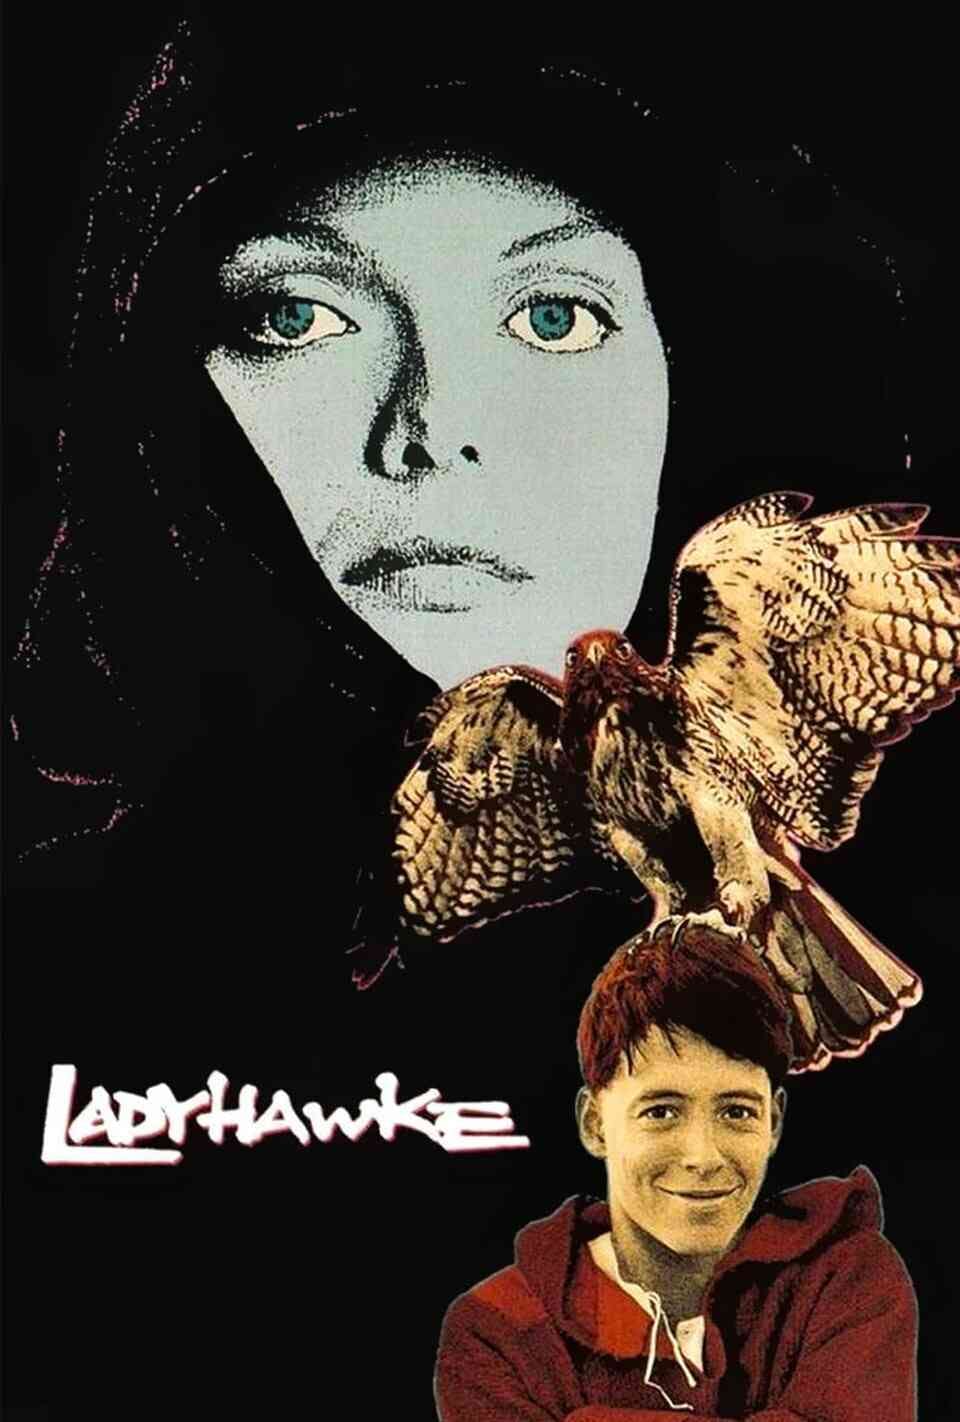 Read Ladyhawke screenplay.